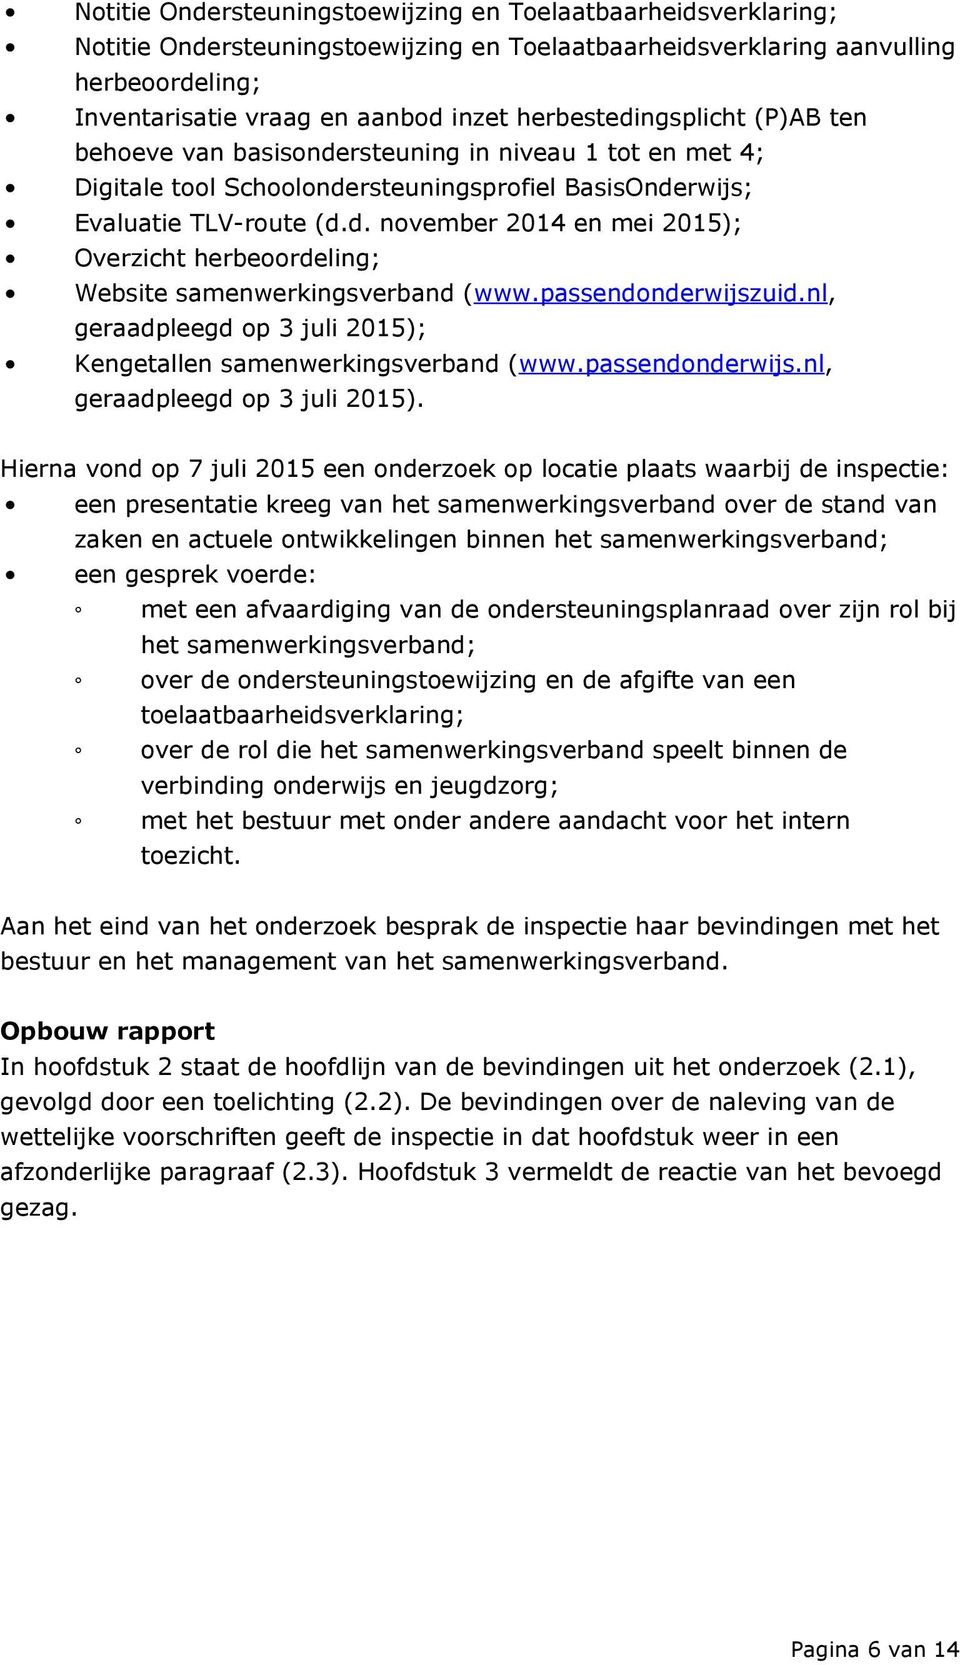 passendonderwijszuid.nl, geraadpleegd op 3 juli 2015);